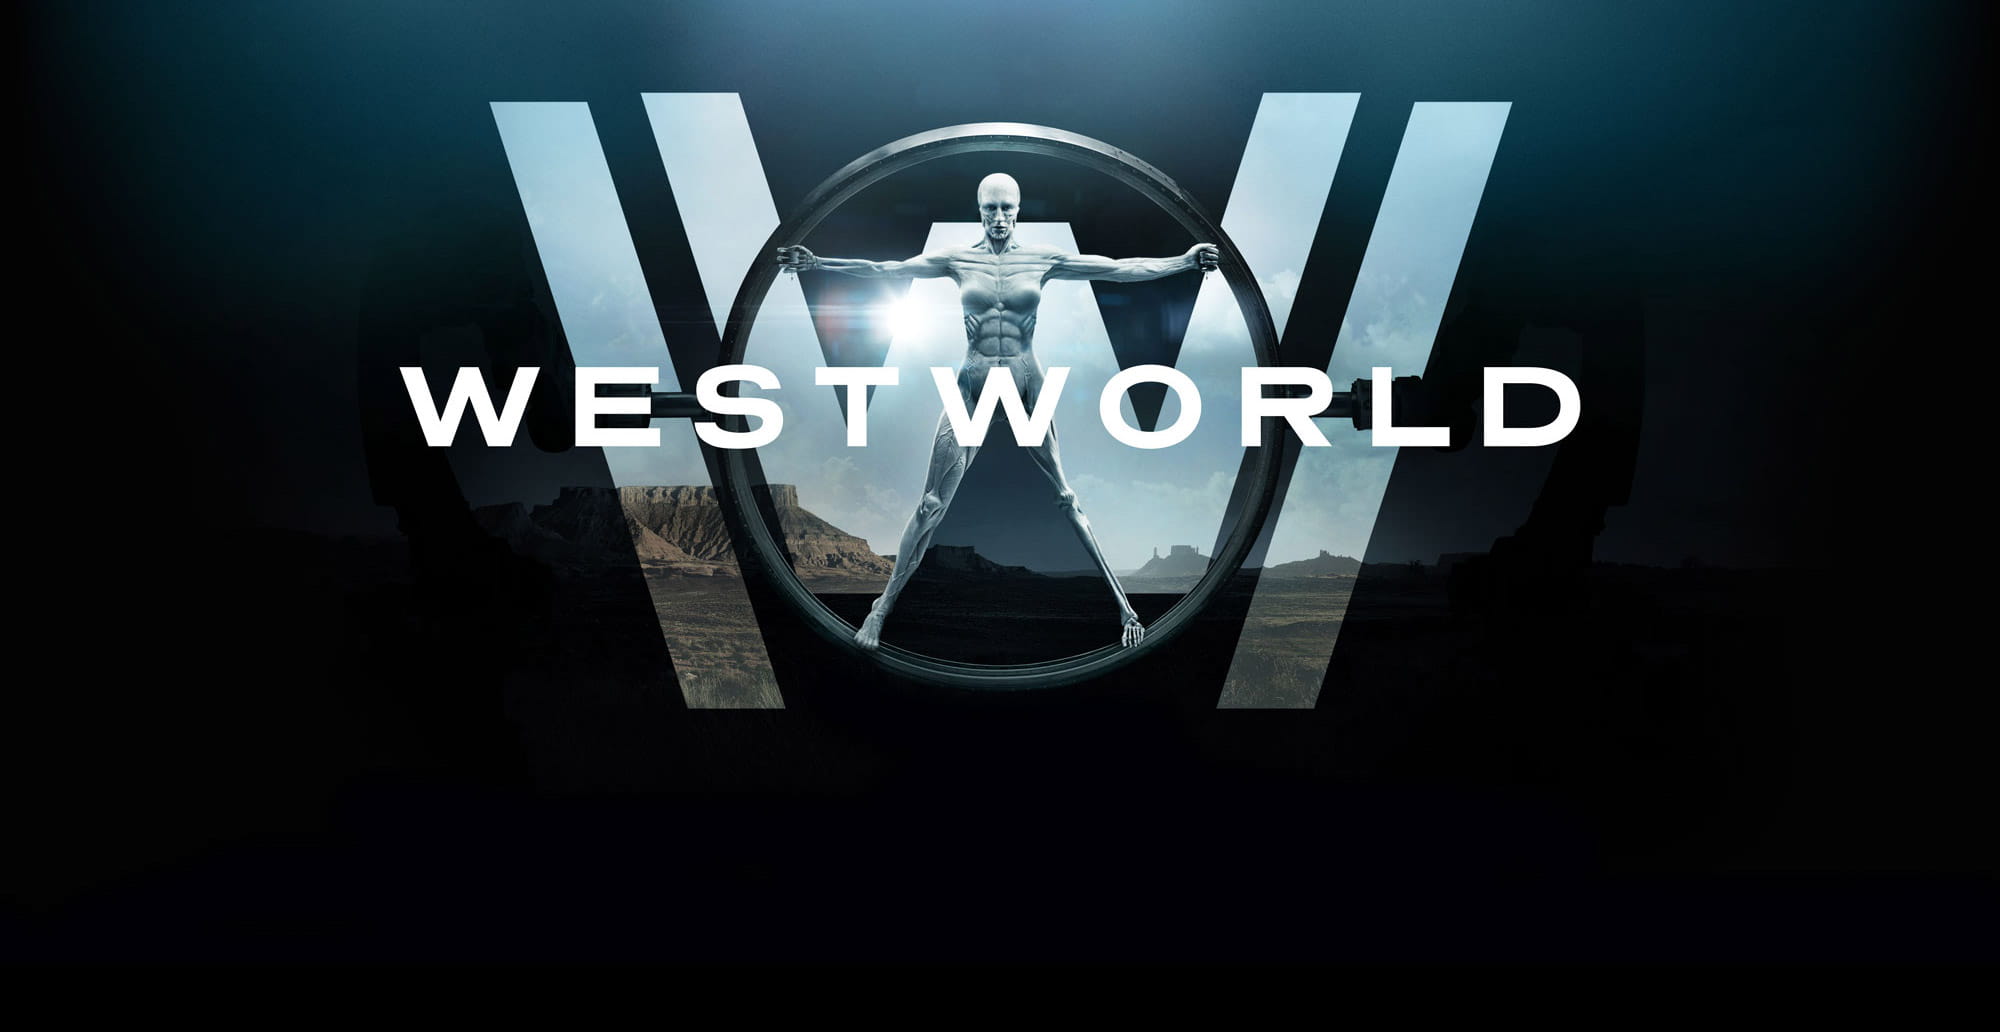 Westworld | Sinopses dos primeiros episódios